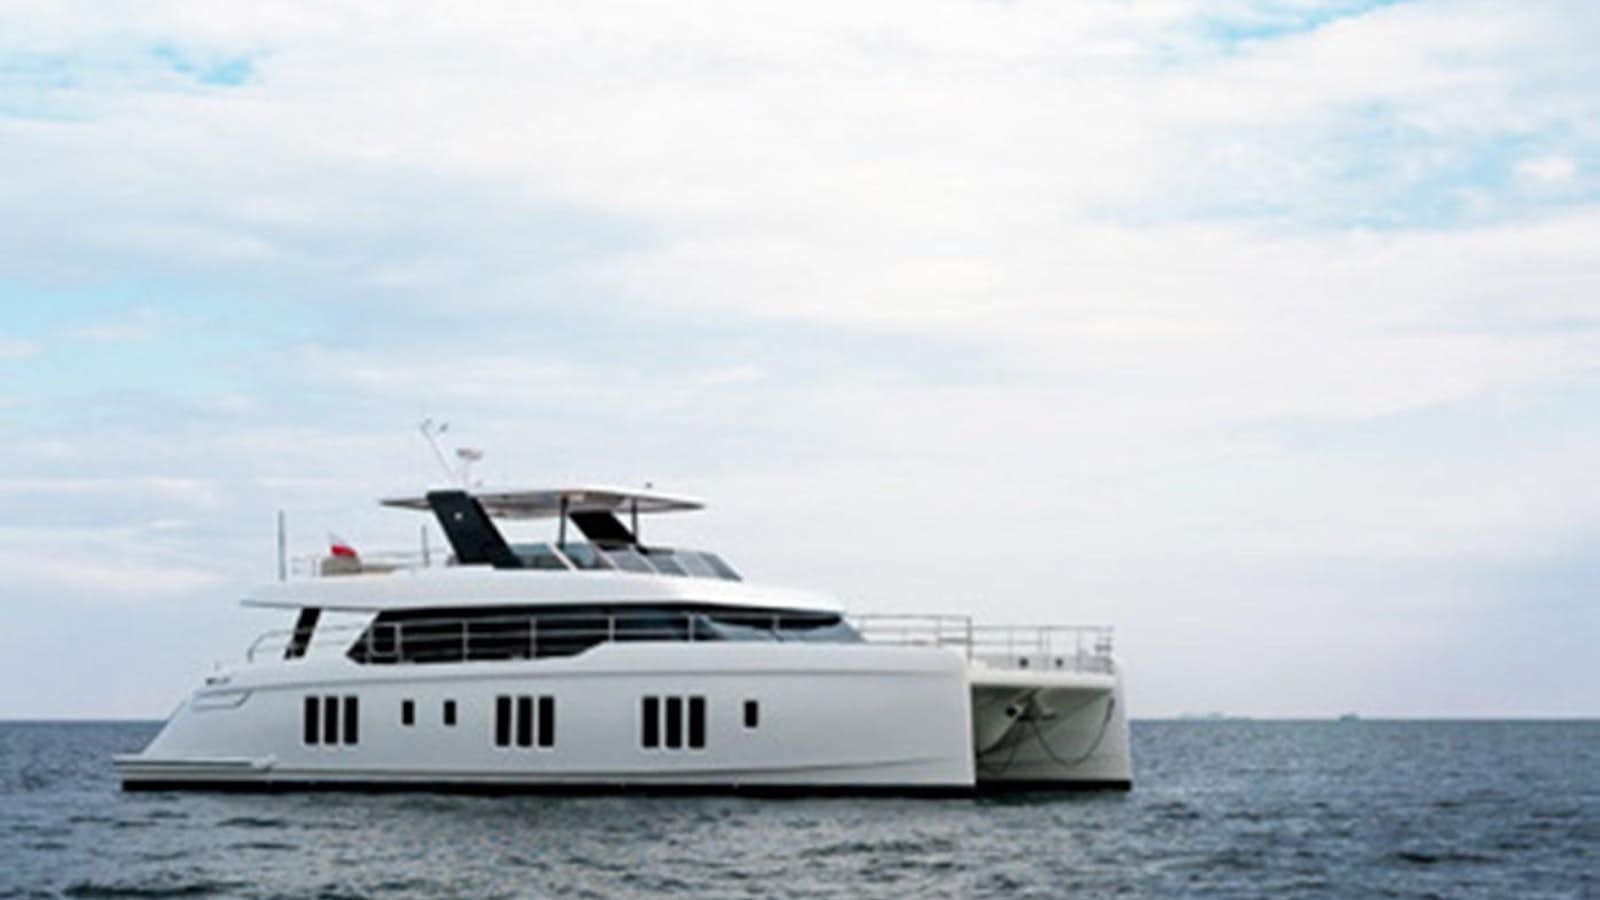 Alma diva
Yacht for Sale